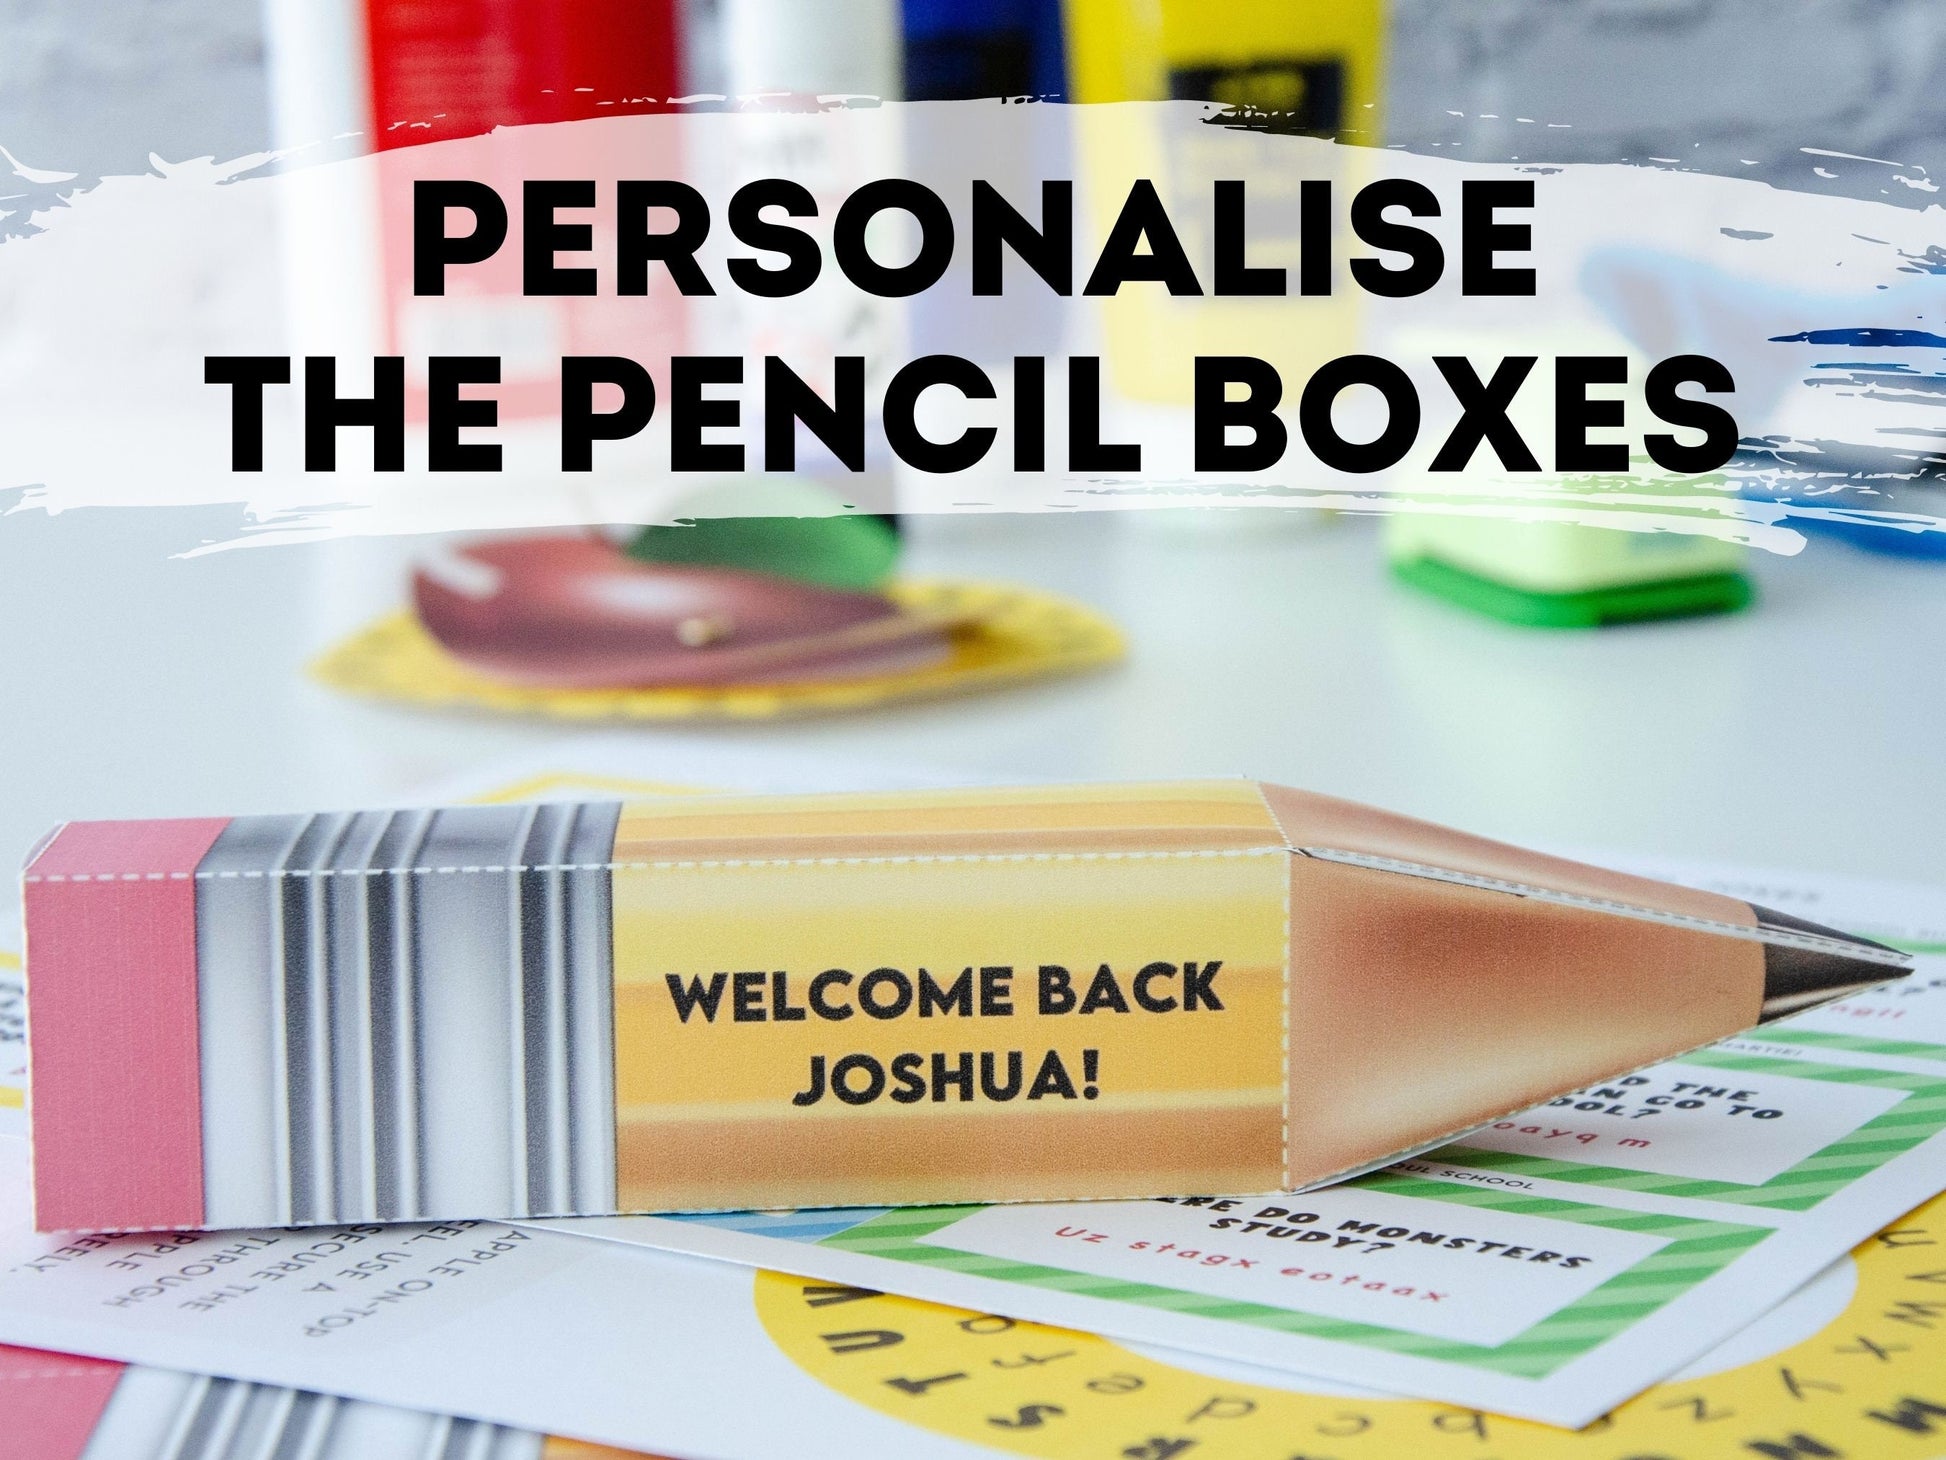 Back To School Countdown Activity Kit. Pencil Gift Box, Plus Secret Messages. Fun Back to School Activity Bundle.